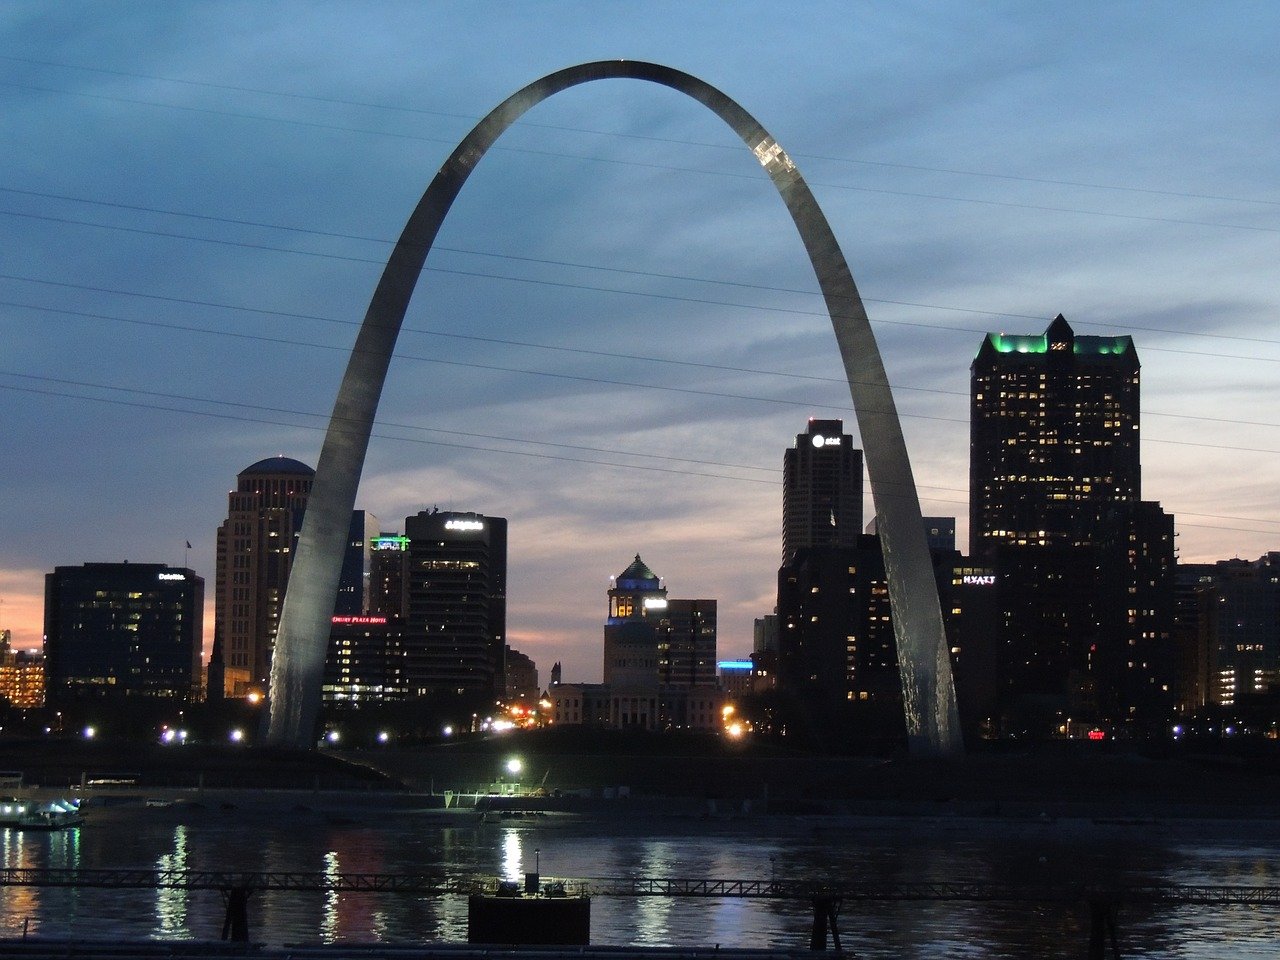 St Louis Female Strippers - City Skyline